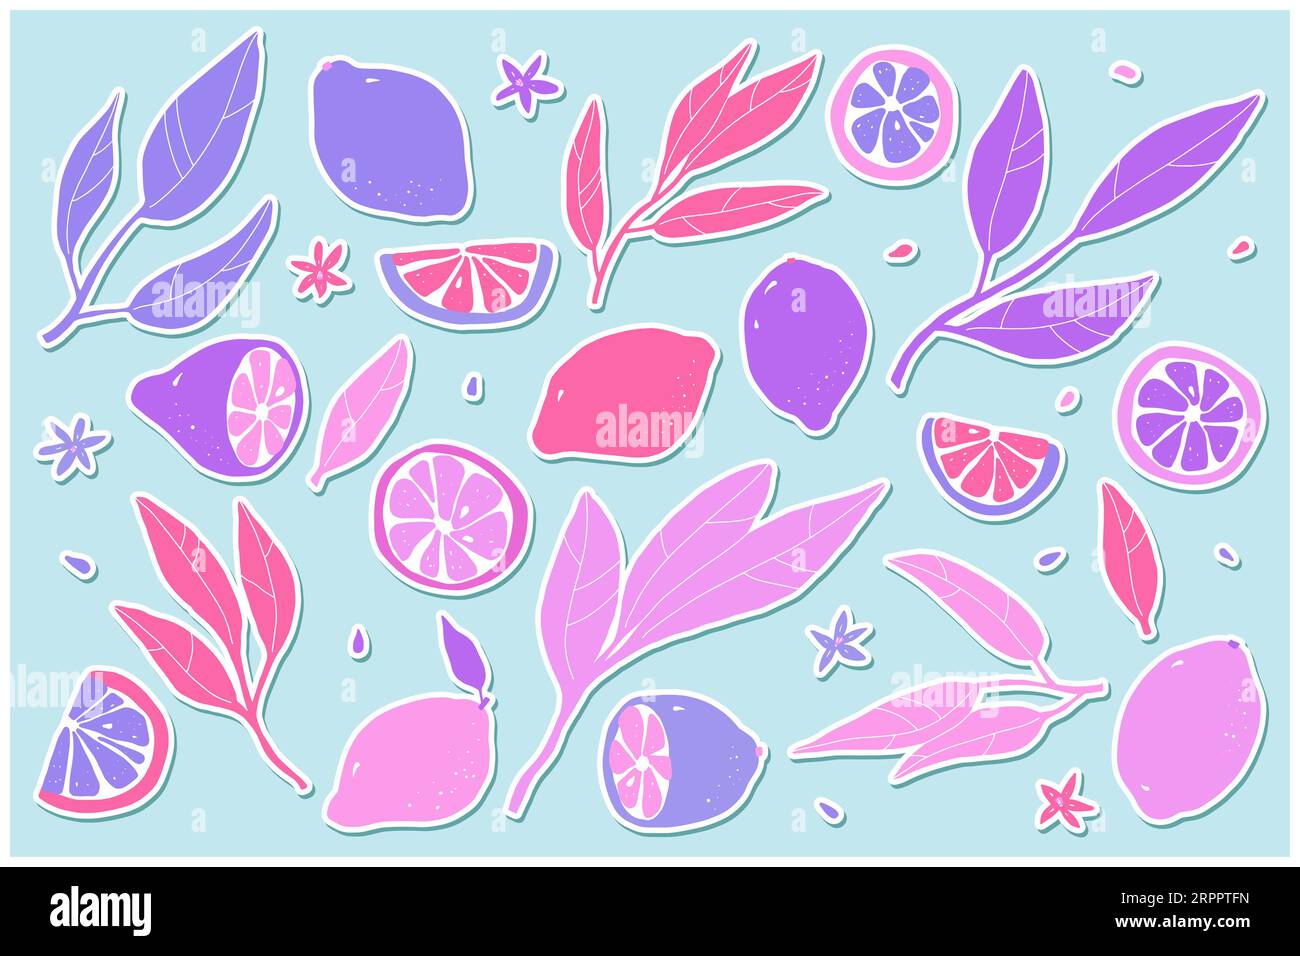 Lemon sticker set. Hand-drawn pink lemons on blue background. Slice, halves, whole fruit, leaves, flowers, seeds. Cartoon citrus tropical collection. Stock Vector